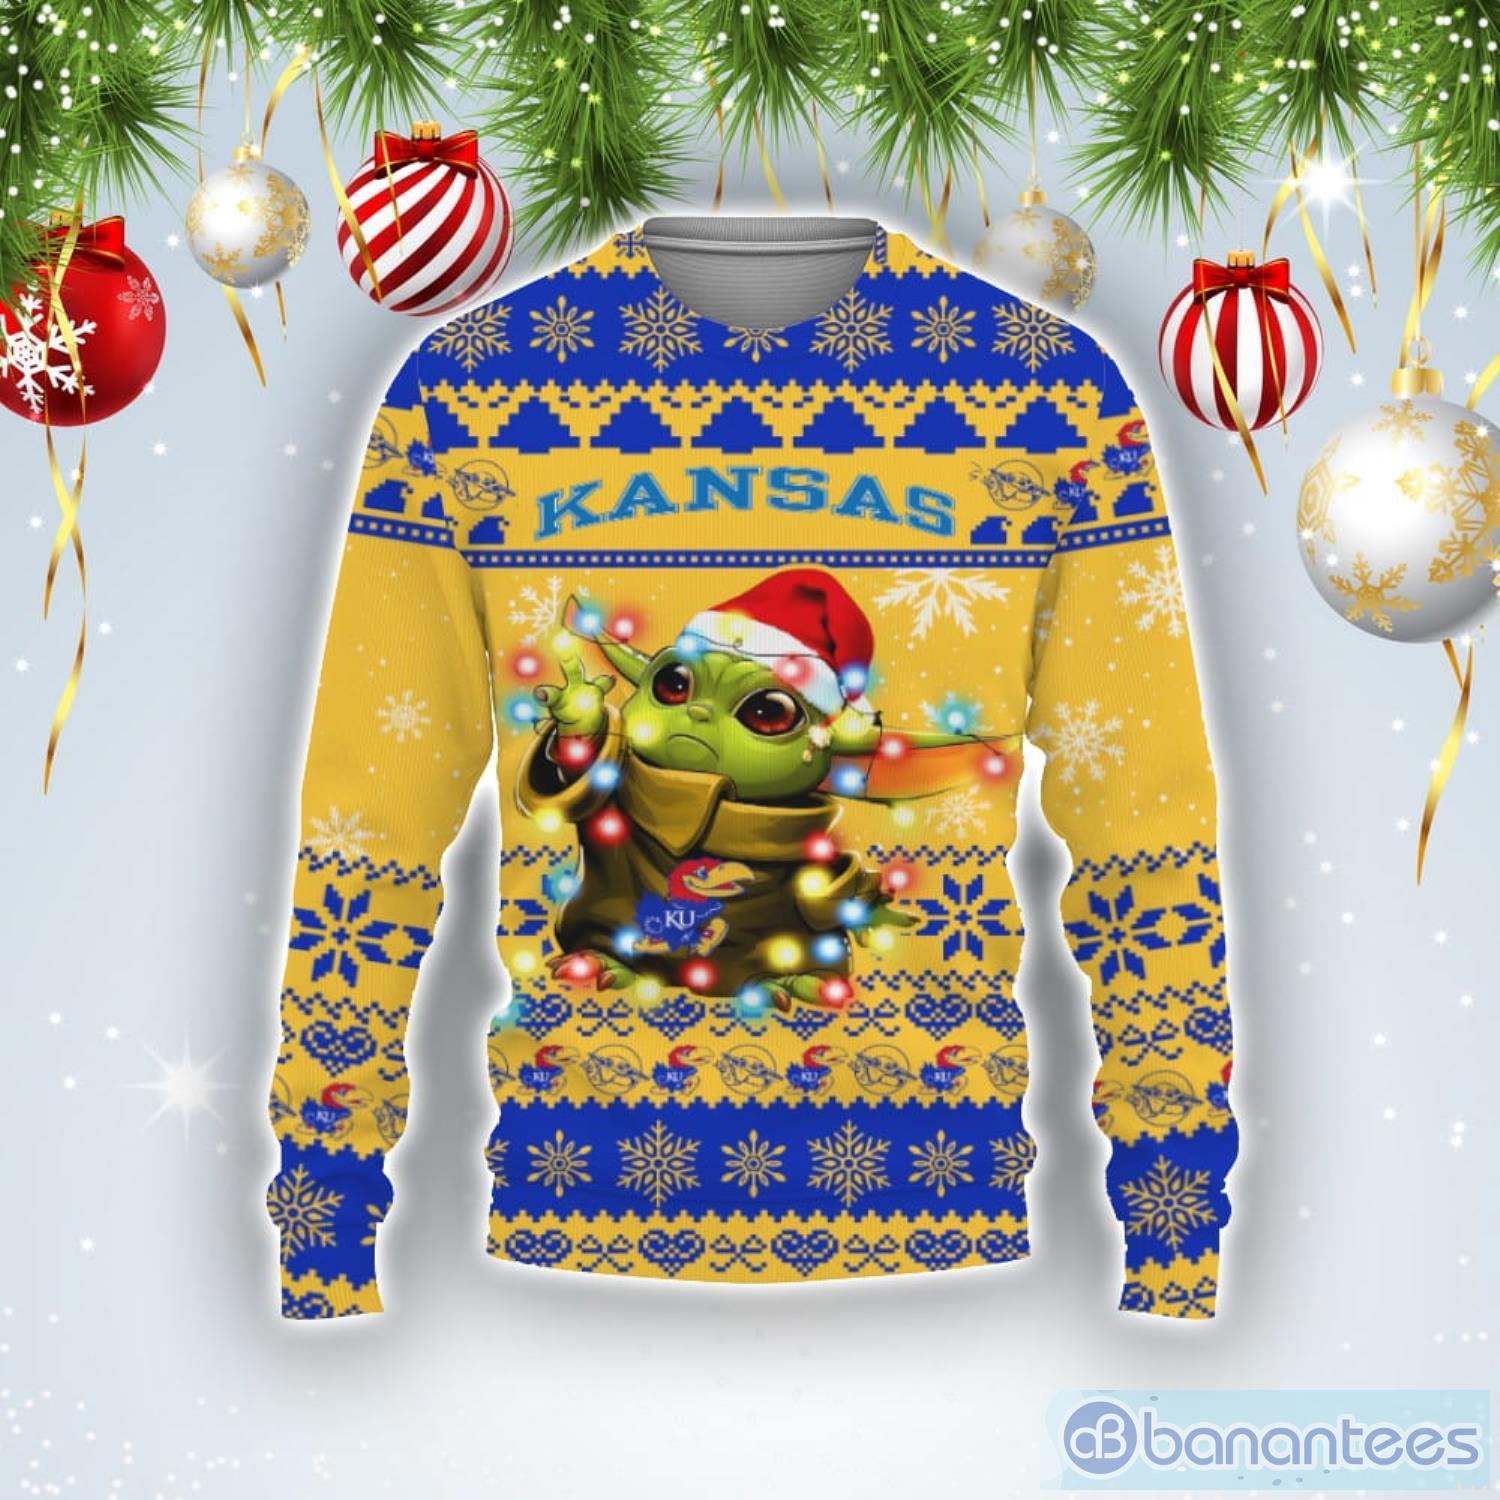 Kansas Jayhawks Baby Yoda Star Wars Sports Football American Ugly Christmas Sweater Product Photo 1